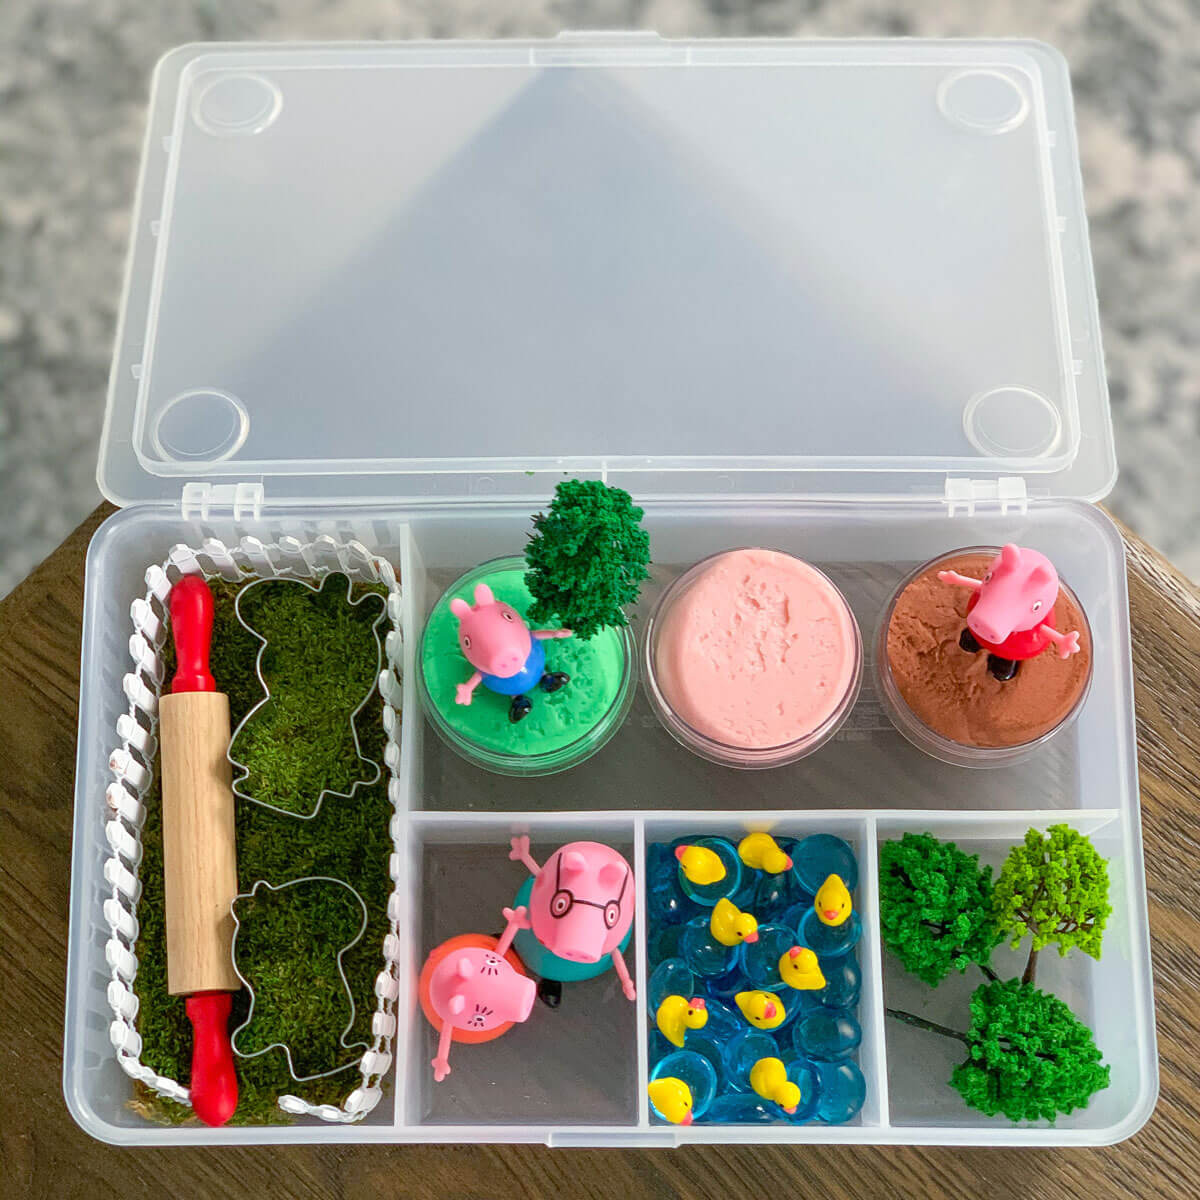 peppa pig activity for kids play dough kit sensory